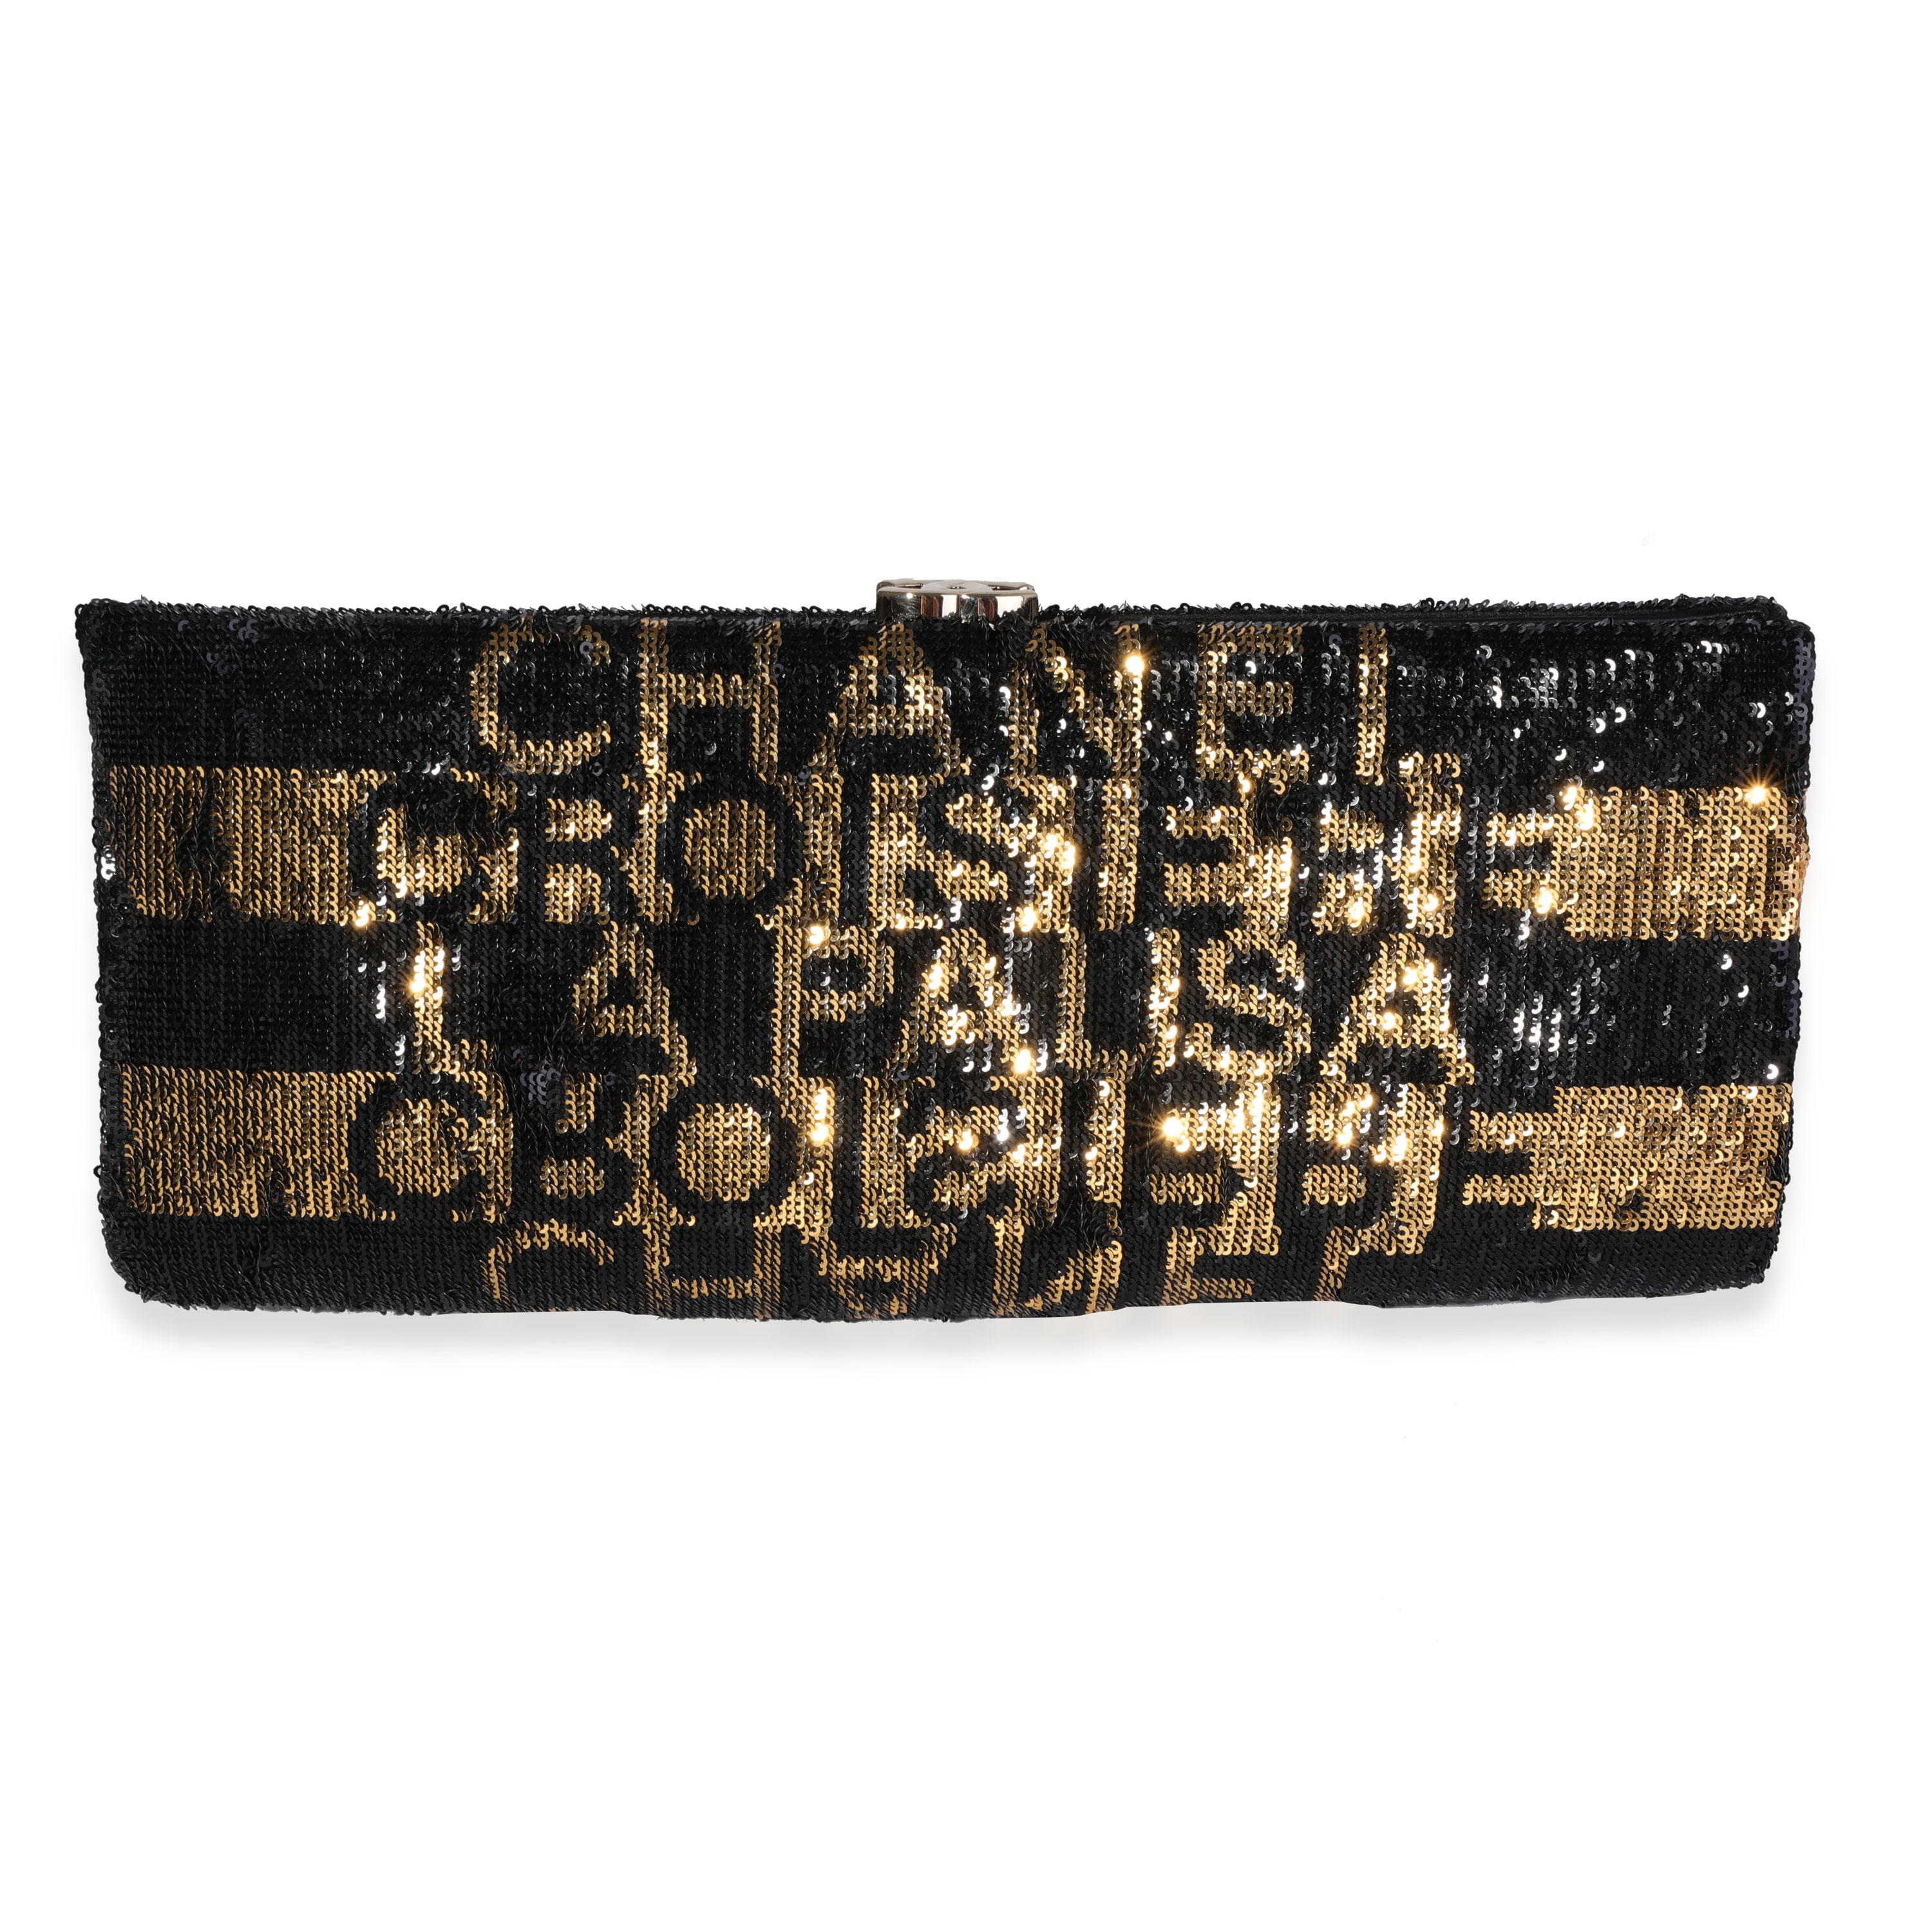 Listing Title: Chanel Black & Gold Sequin La Pausa Clutch
SKU: 118700
MSRP: 5900.00
Condition: Pre-owned (3000)
Handbag Condition: Never Worn
Brand: Chanel
Model: La Pausa Clutch
Origin Country: Italy
Handbag Silhouette: Clutch;Evening